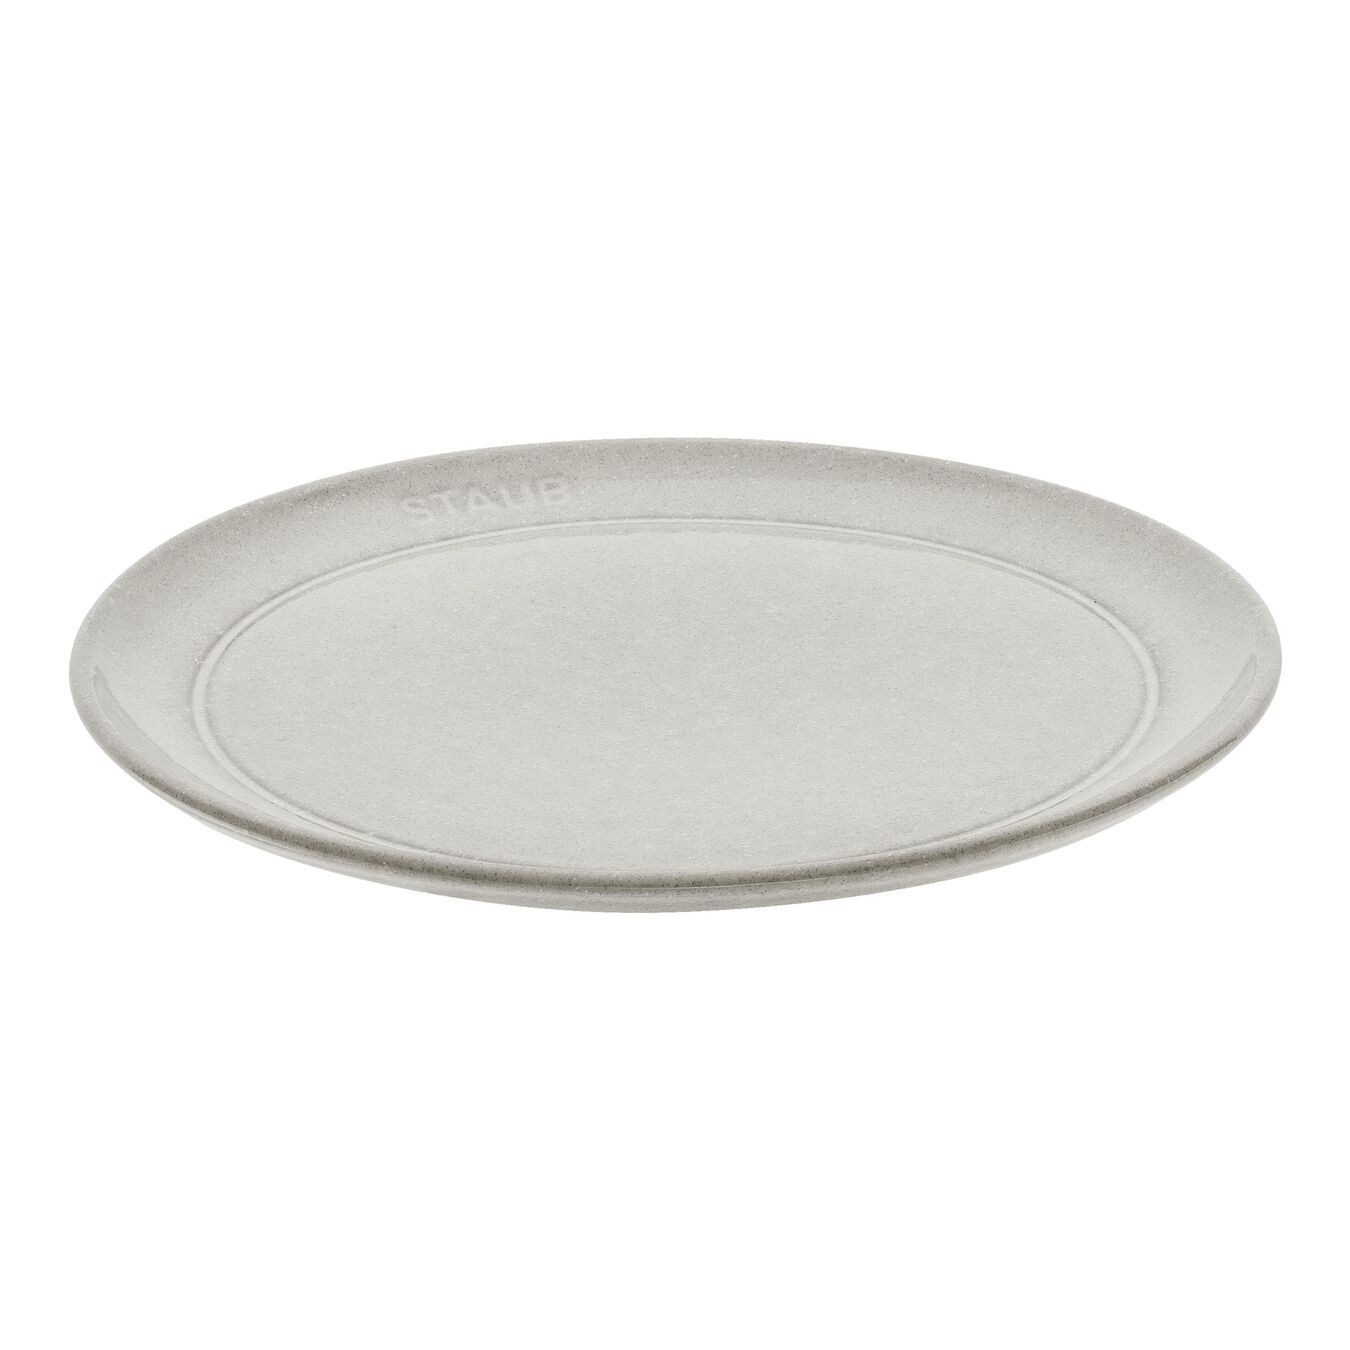 20 cm Ceramic Plate flat white truffle,,large 1